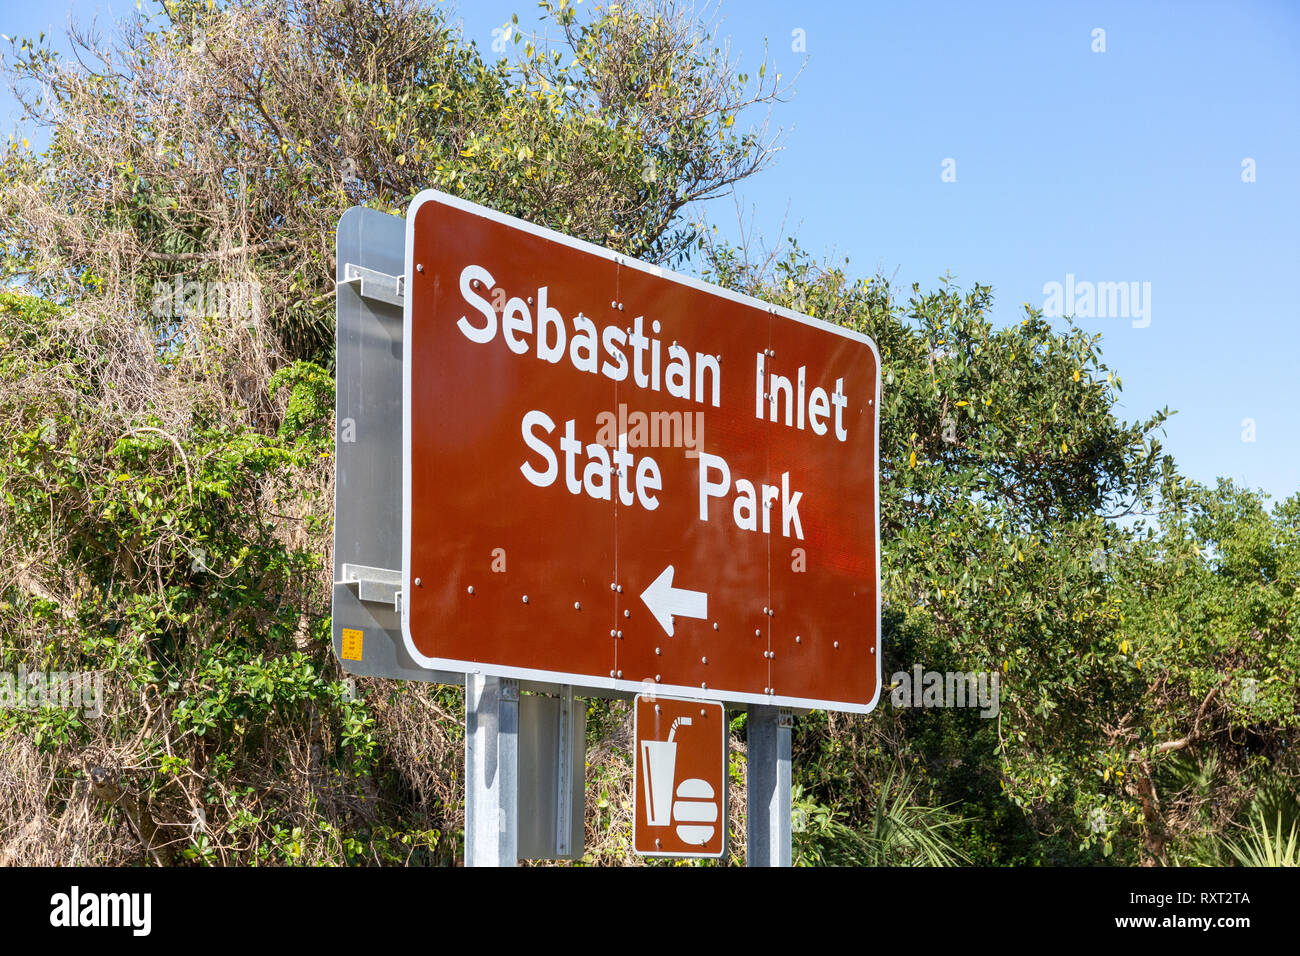 Sebastian Inlet, State Park, Florida, USA Stock Photo